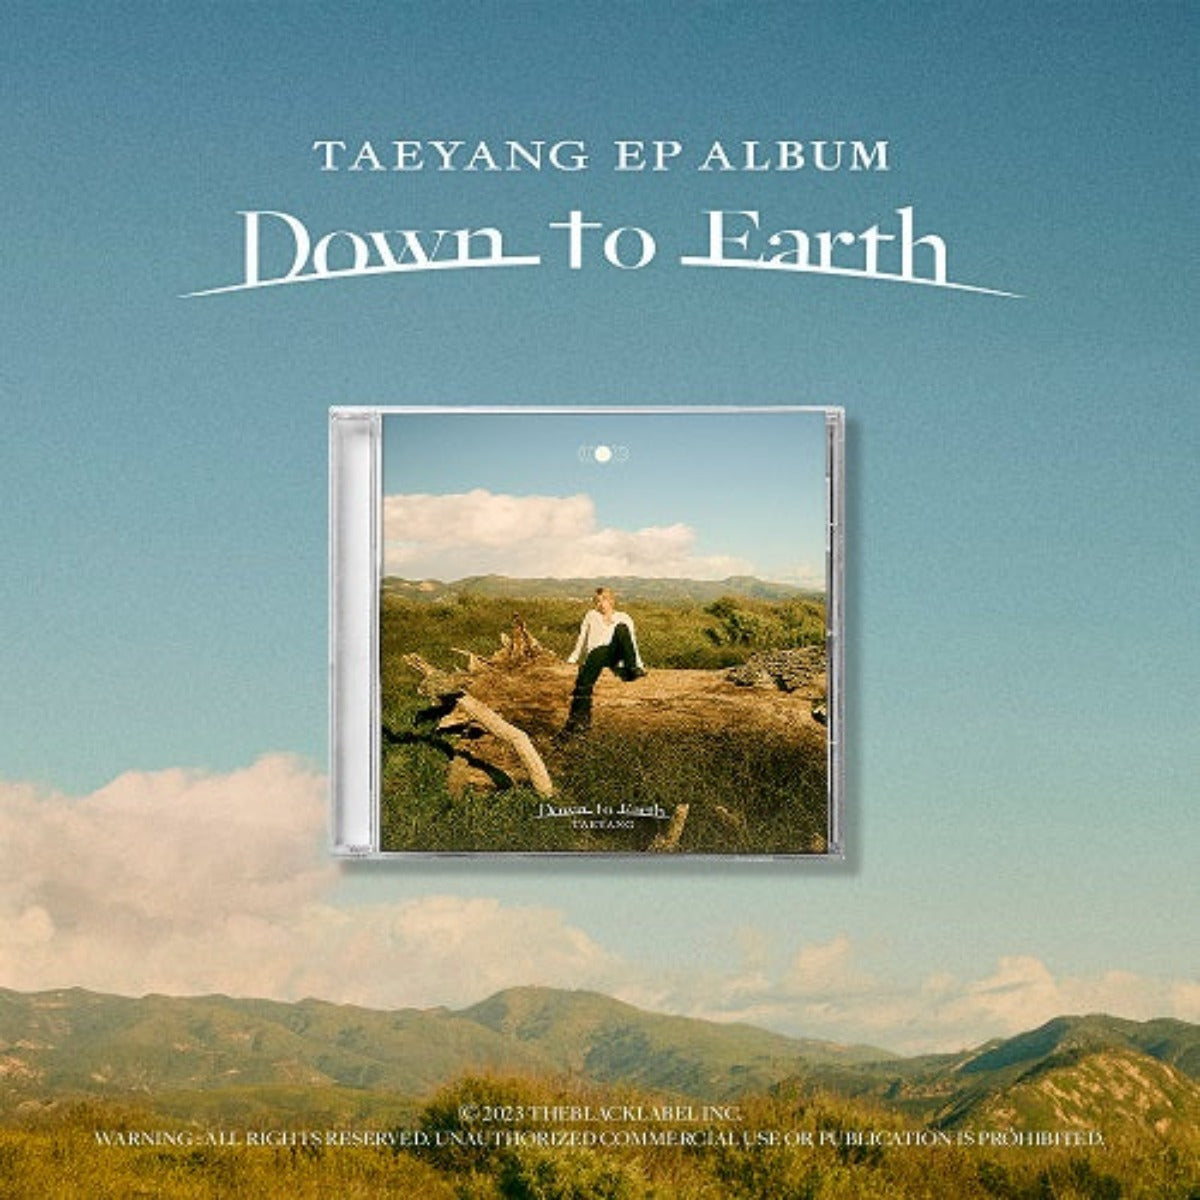 Big Bang: TAEYANG EP Album - Down to Earth